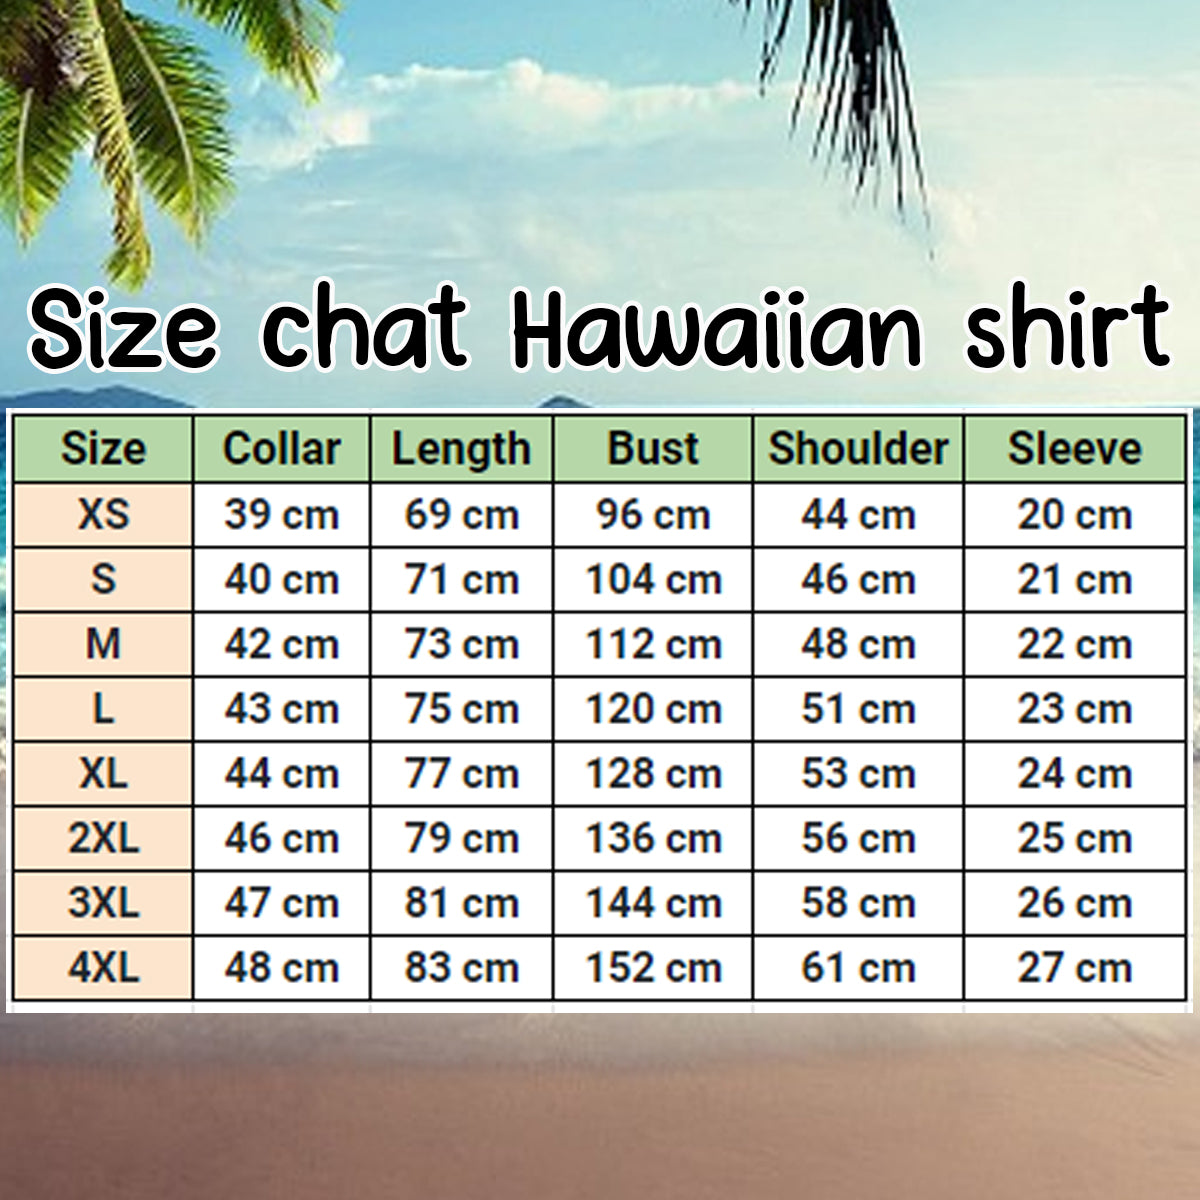 Colorful Sloth Wear Hat Art Hawaiian Shirt